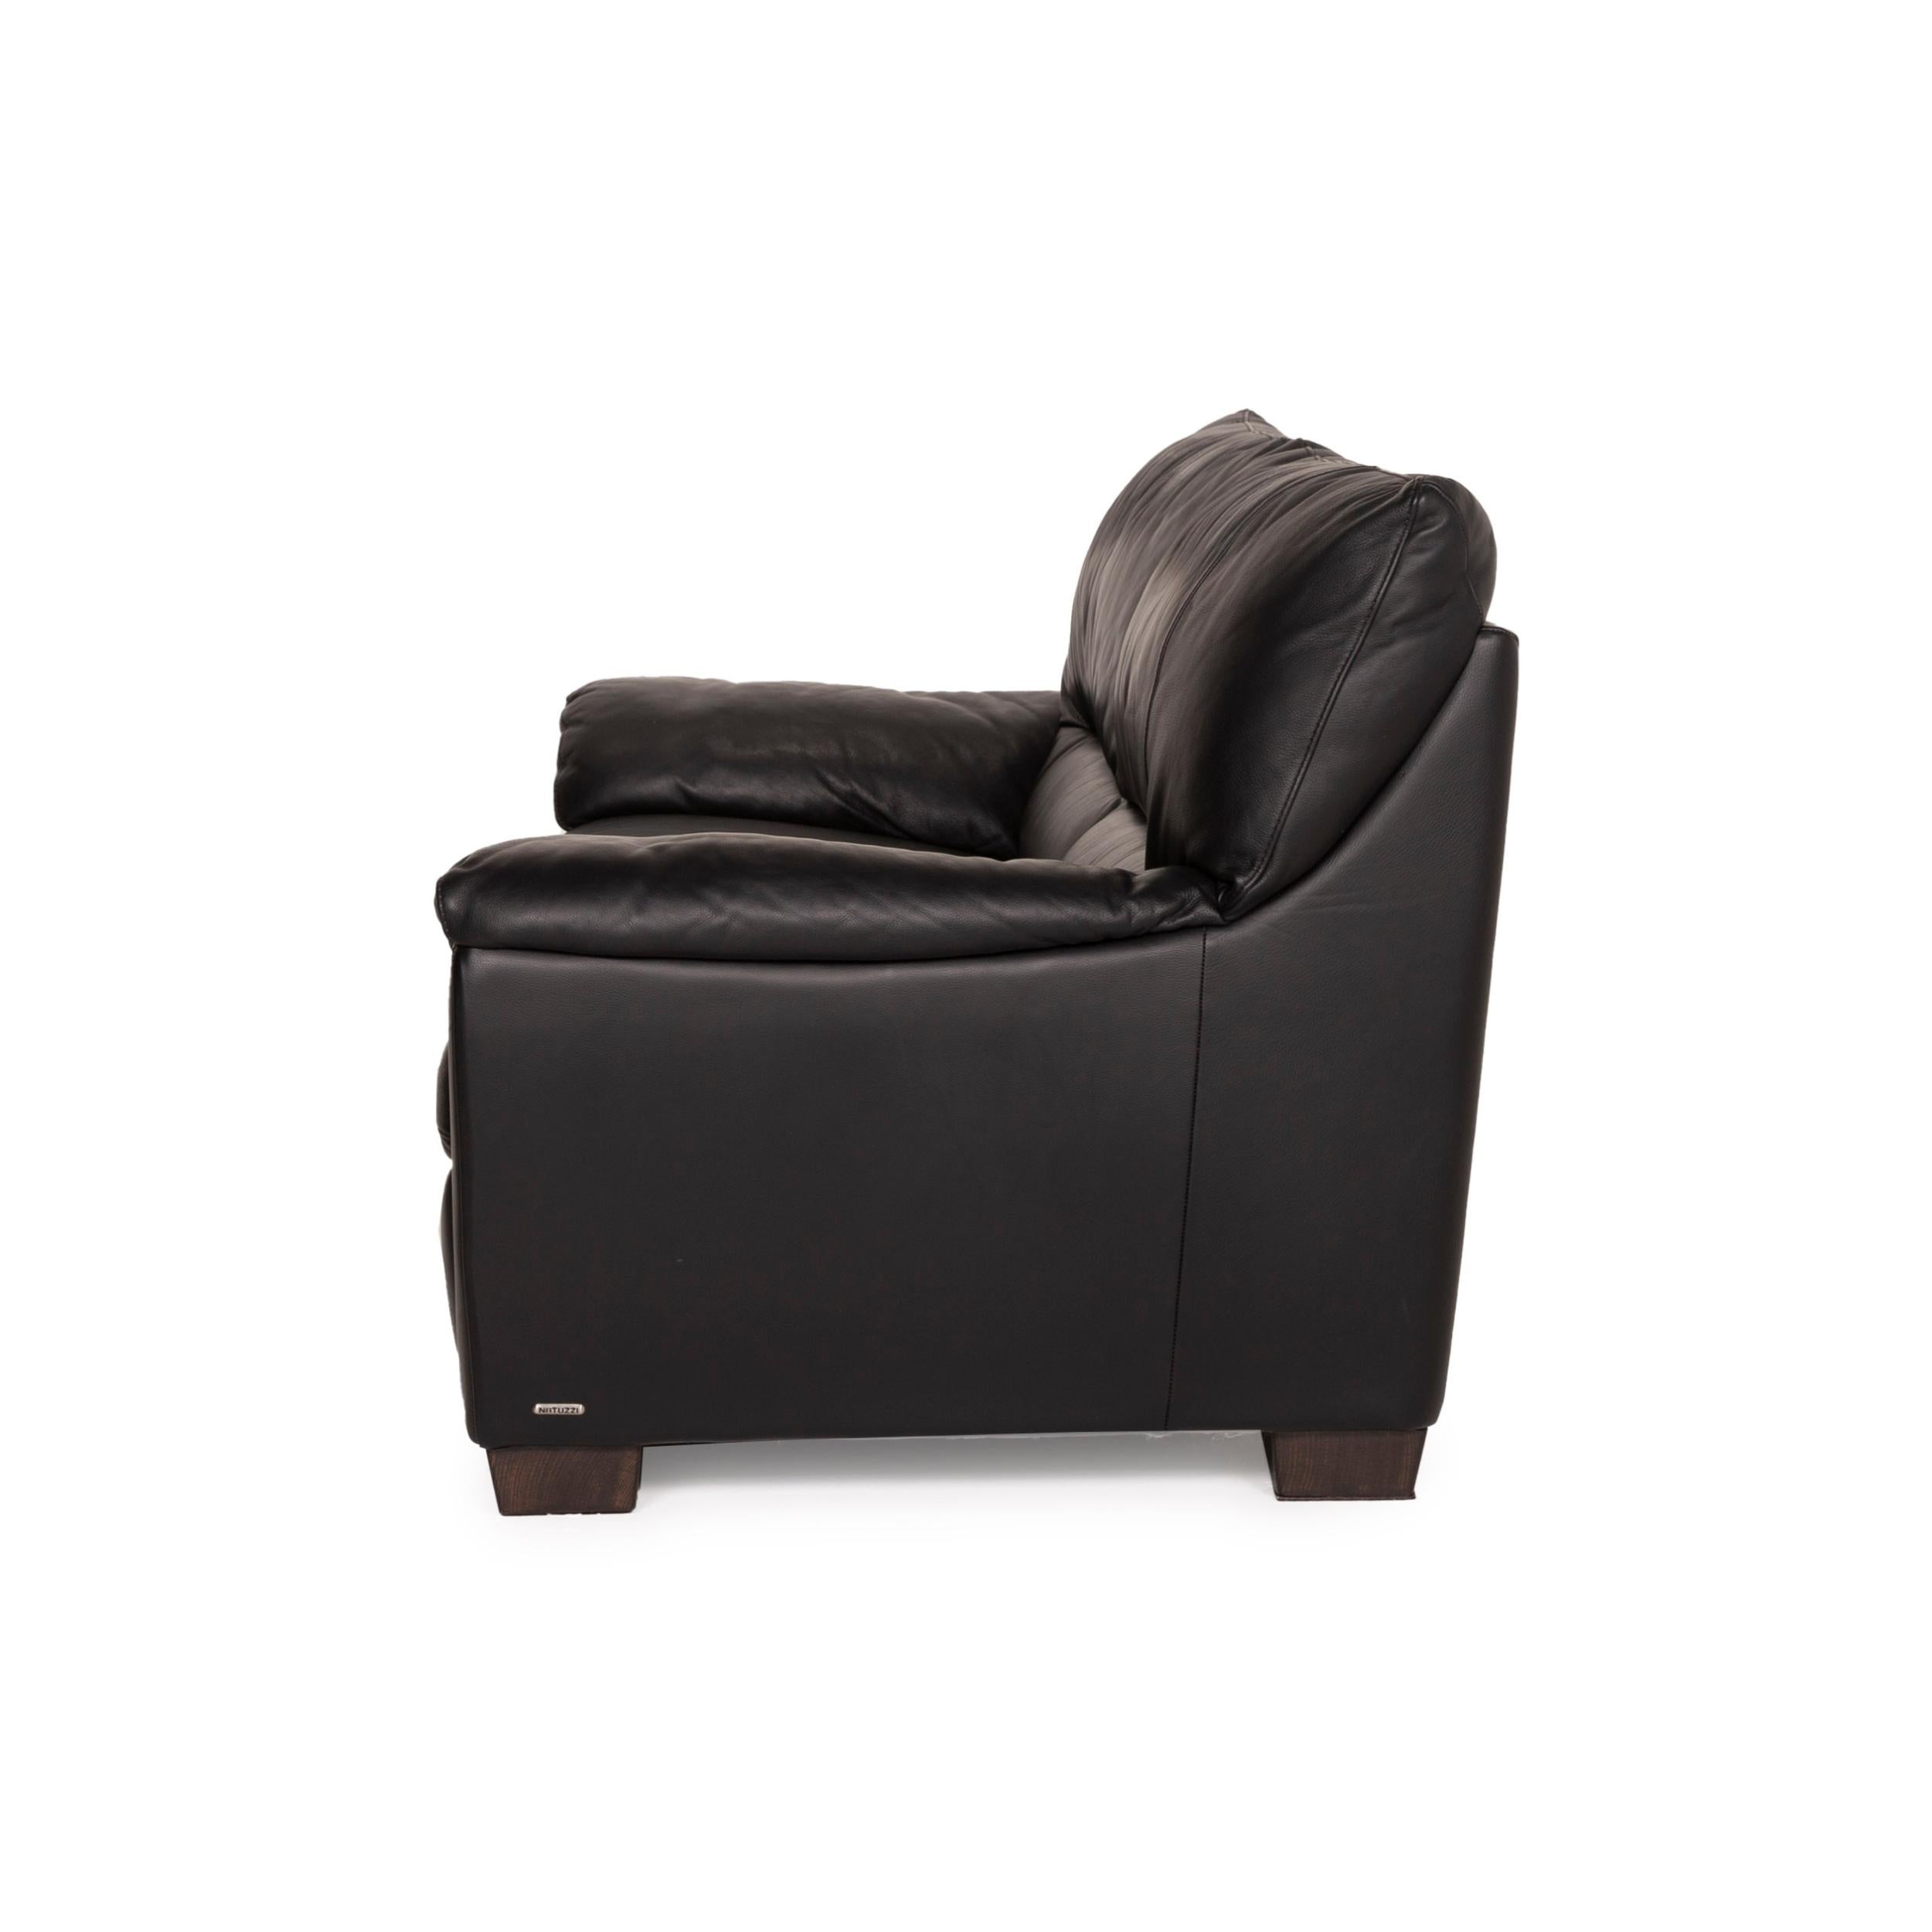 Natuzzi Two-Seater Leather Sofa Black 2